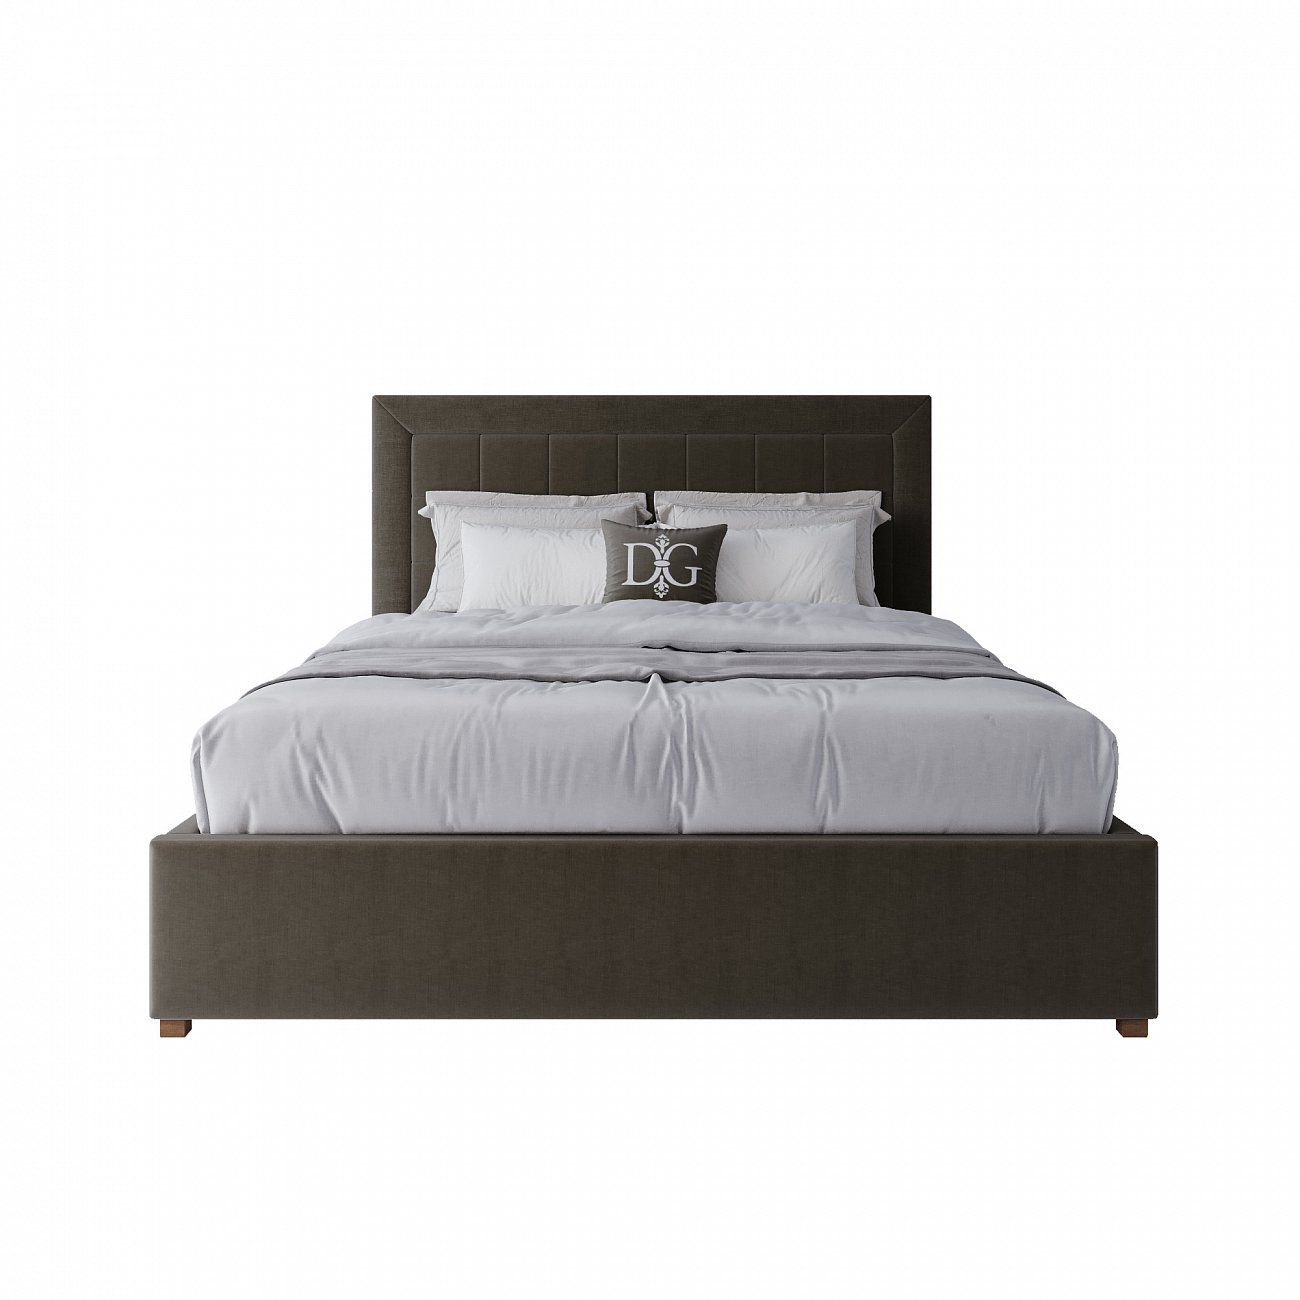 Double bed 160x200 cm brown Elizabeth